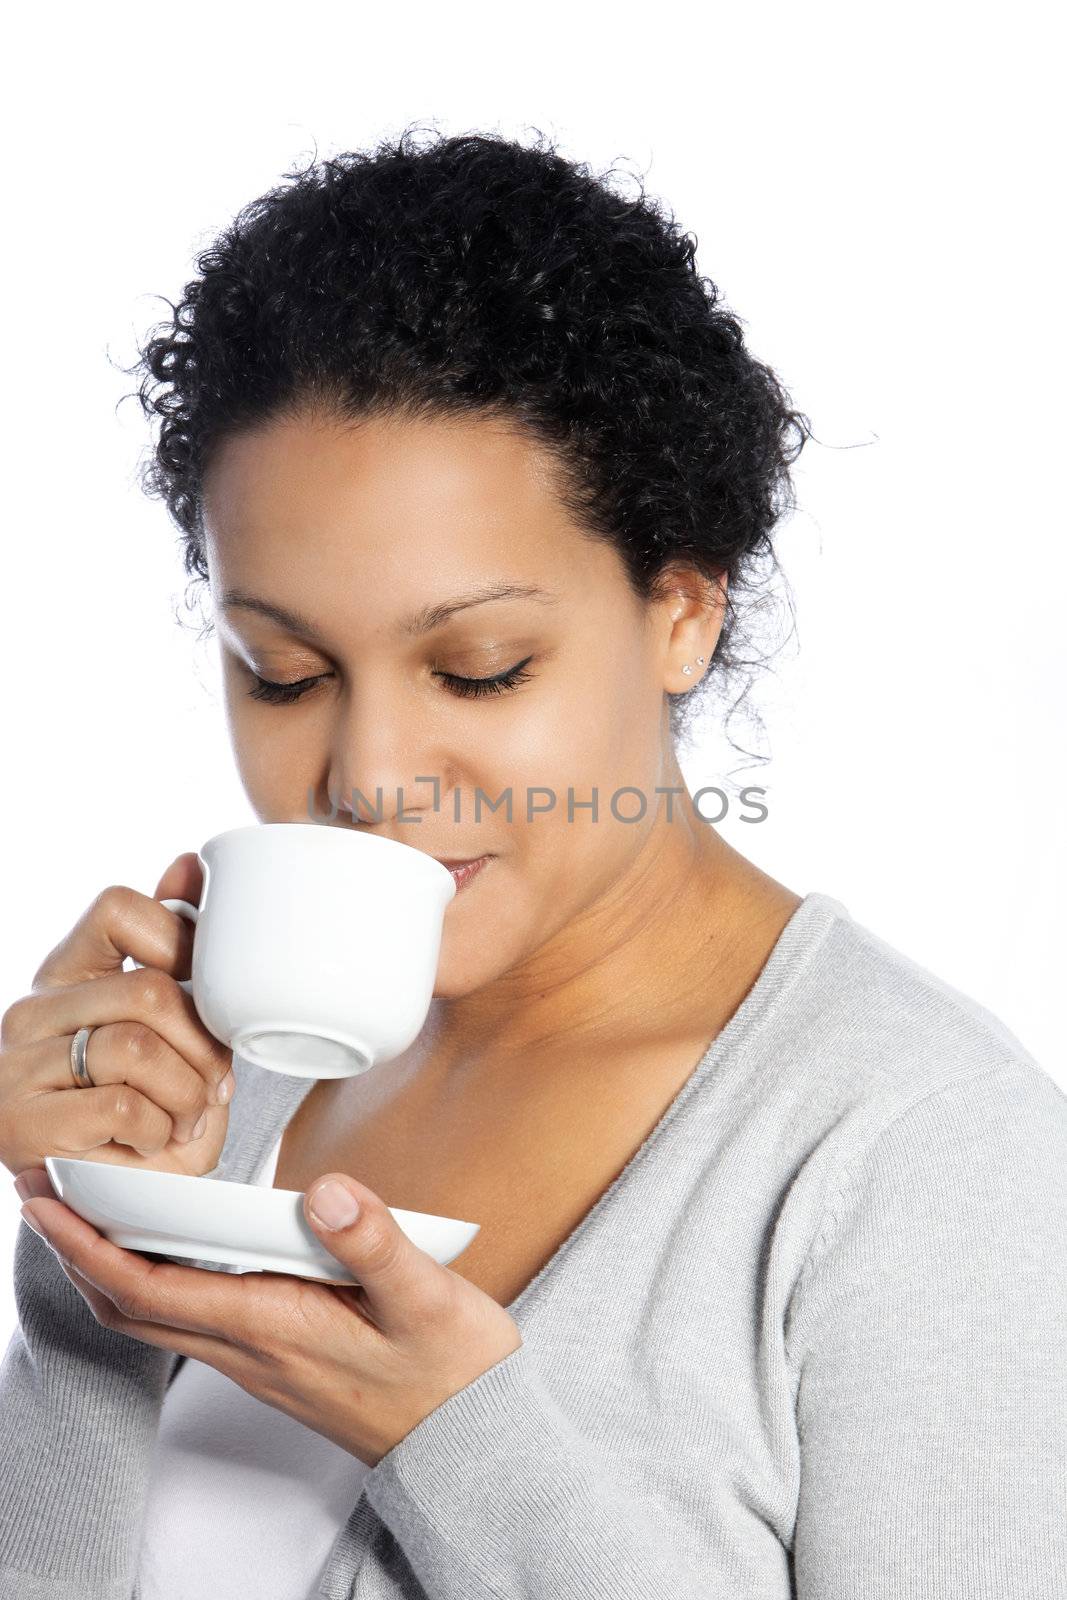 Dark skinned lady enjoys her coffee by Farina6000